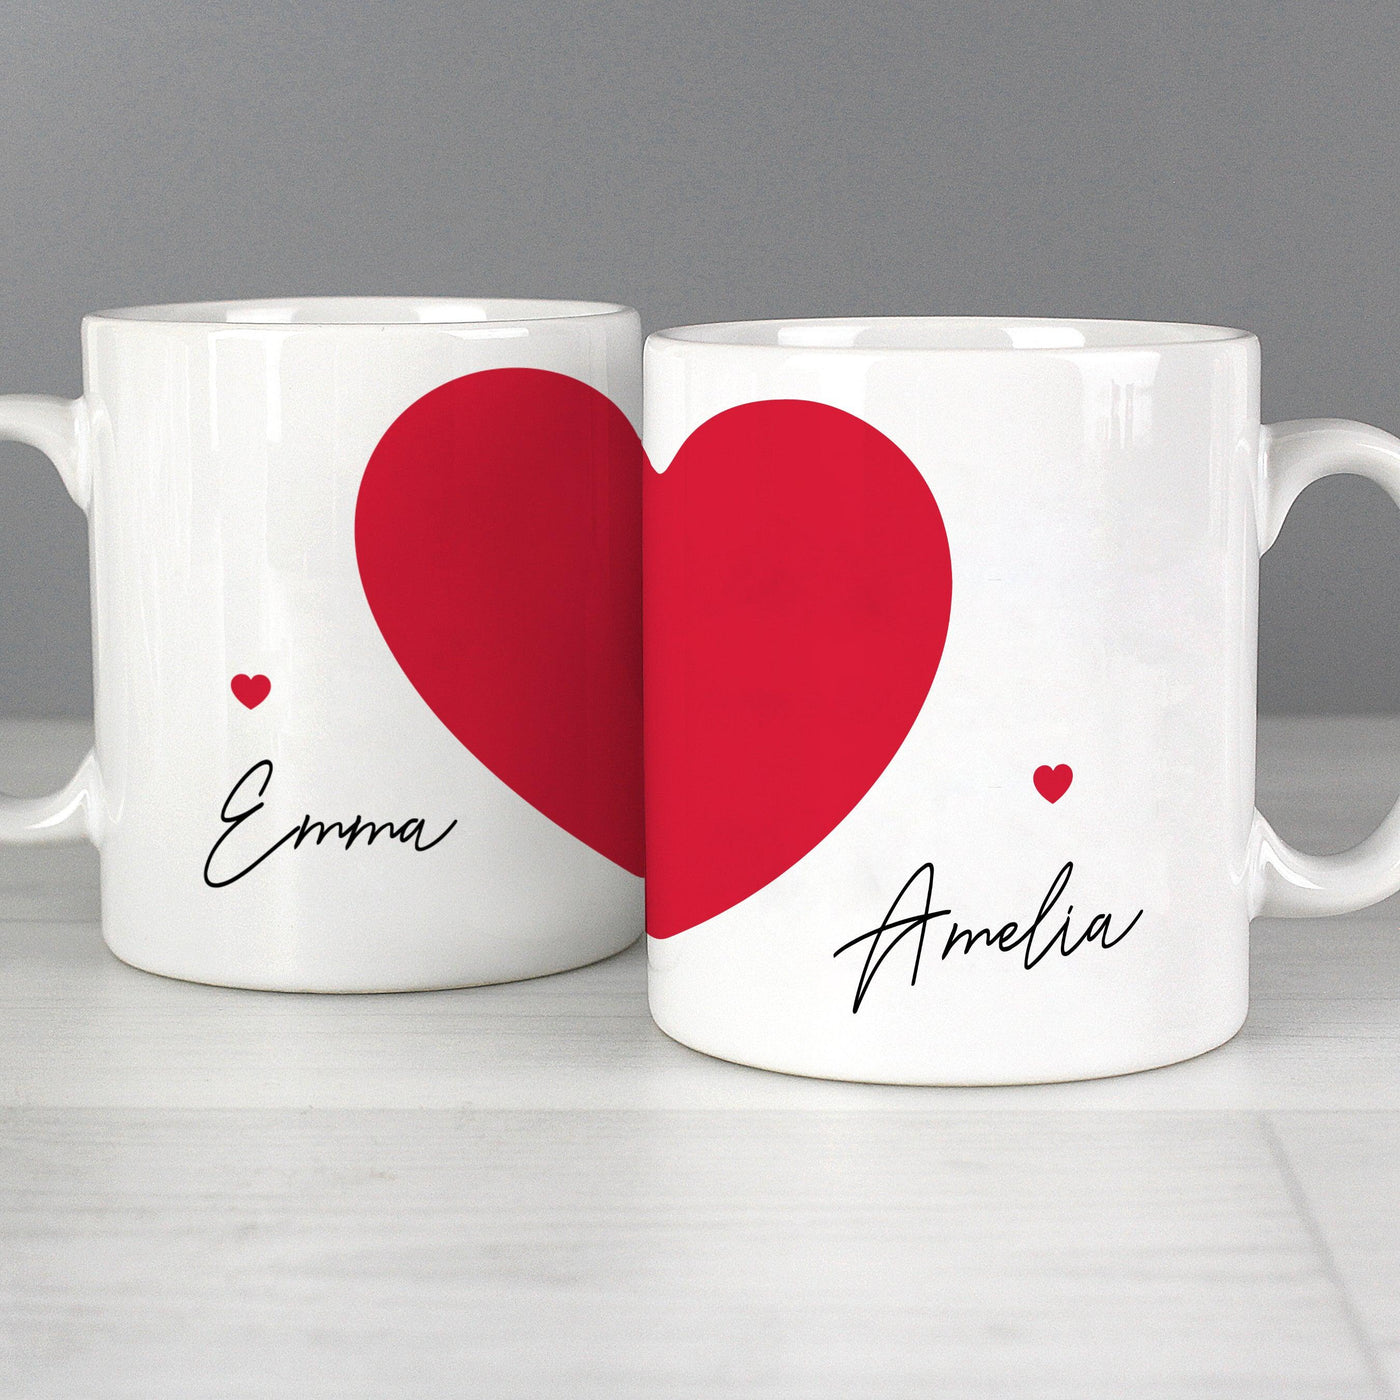 Personalised Two Hearts Ceramic Mug Set - Shop Personalised Gifts